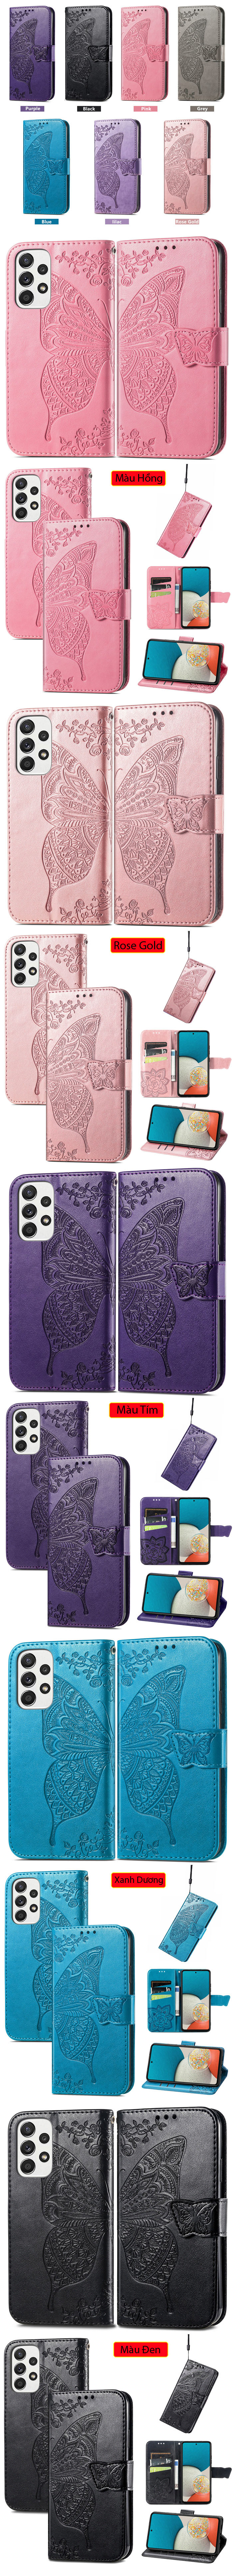 Bao da Samsung A73 5G LT Wallet Butterfly thời trang cá tính 2